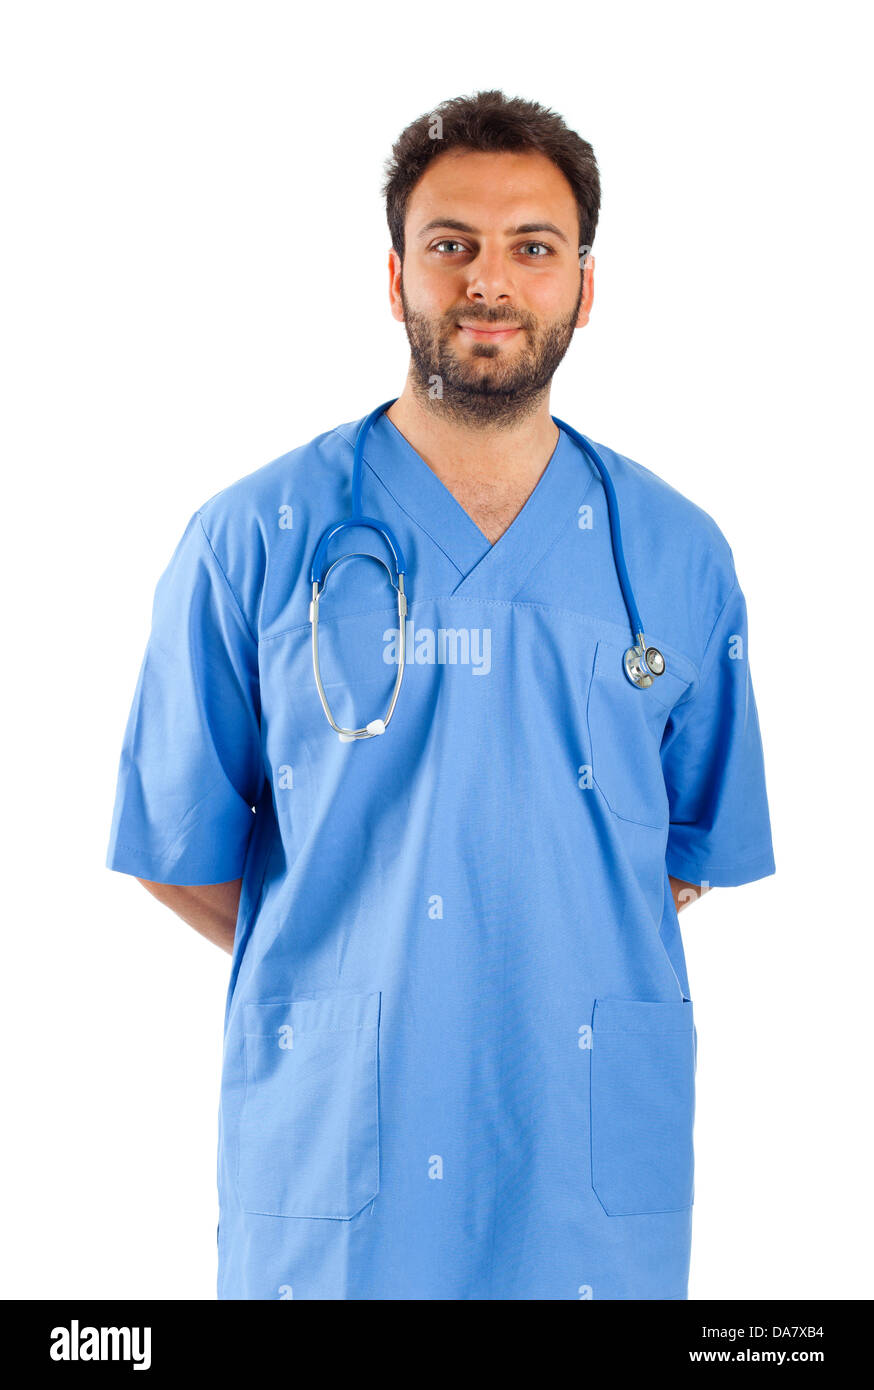 Male nurse portrait on white background Stock Photo